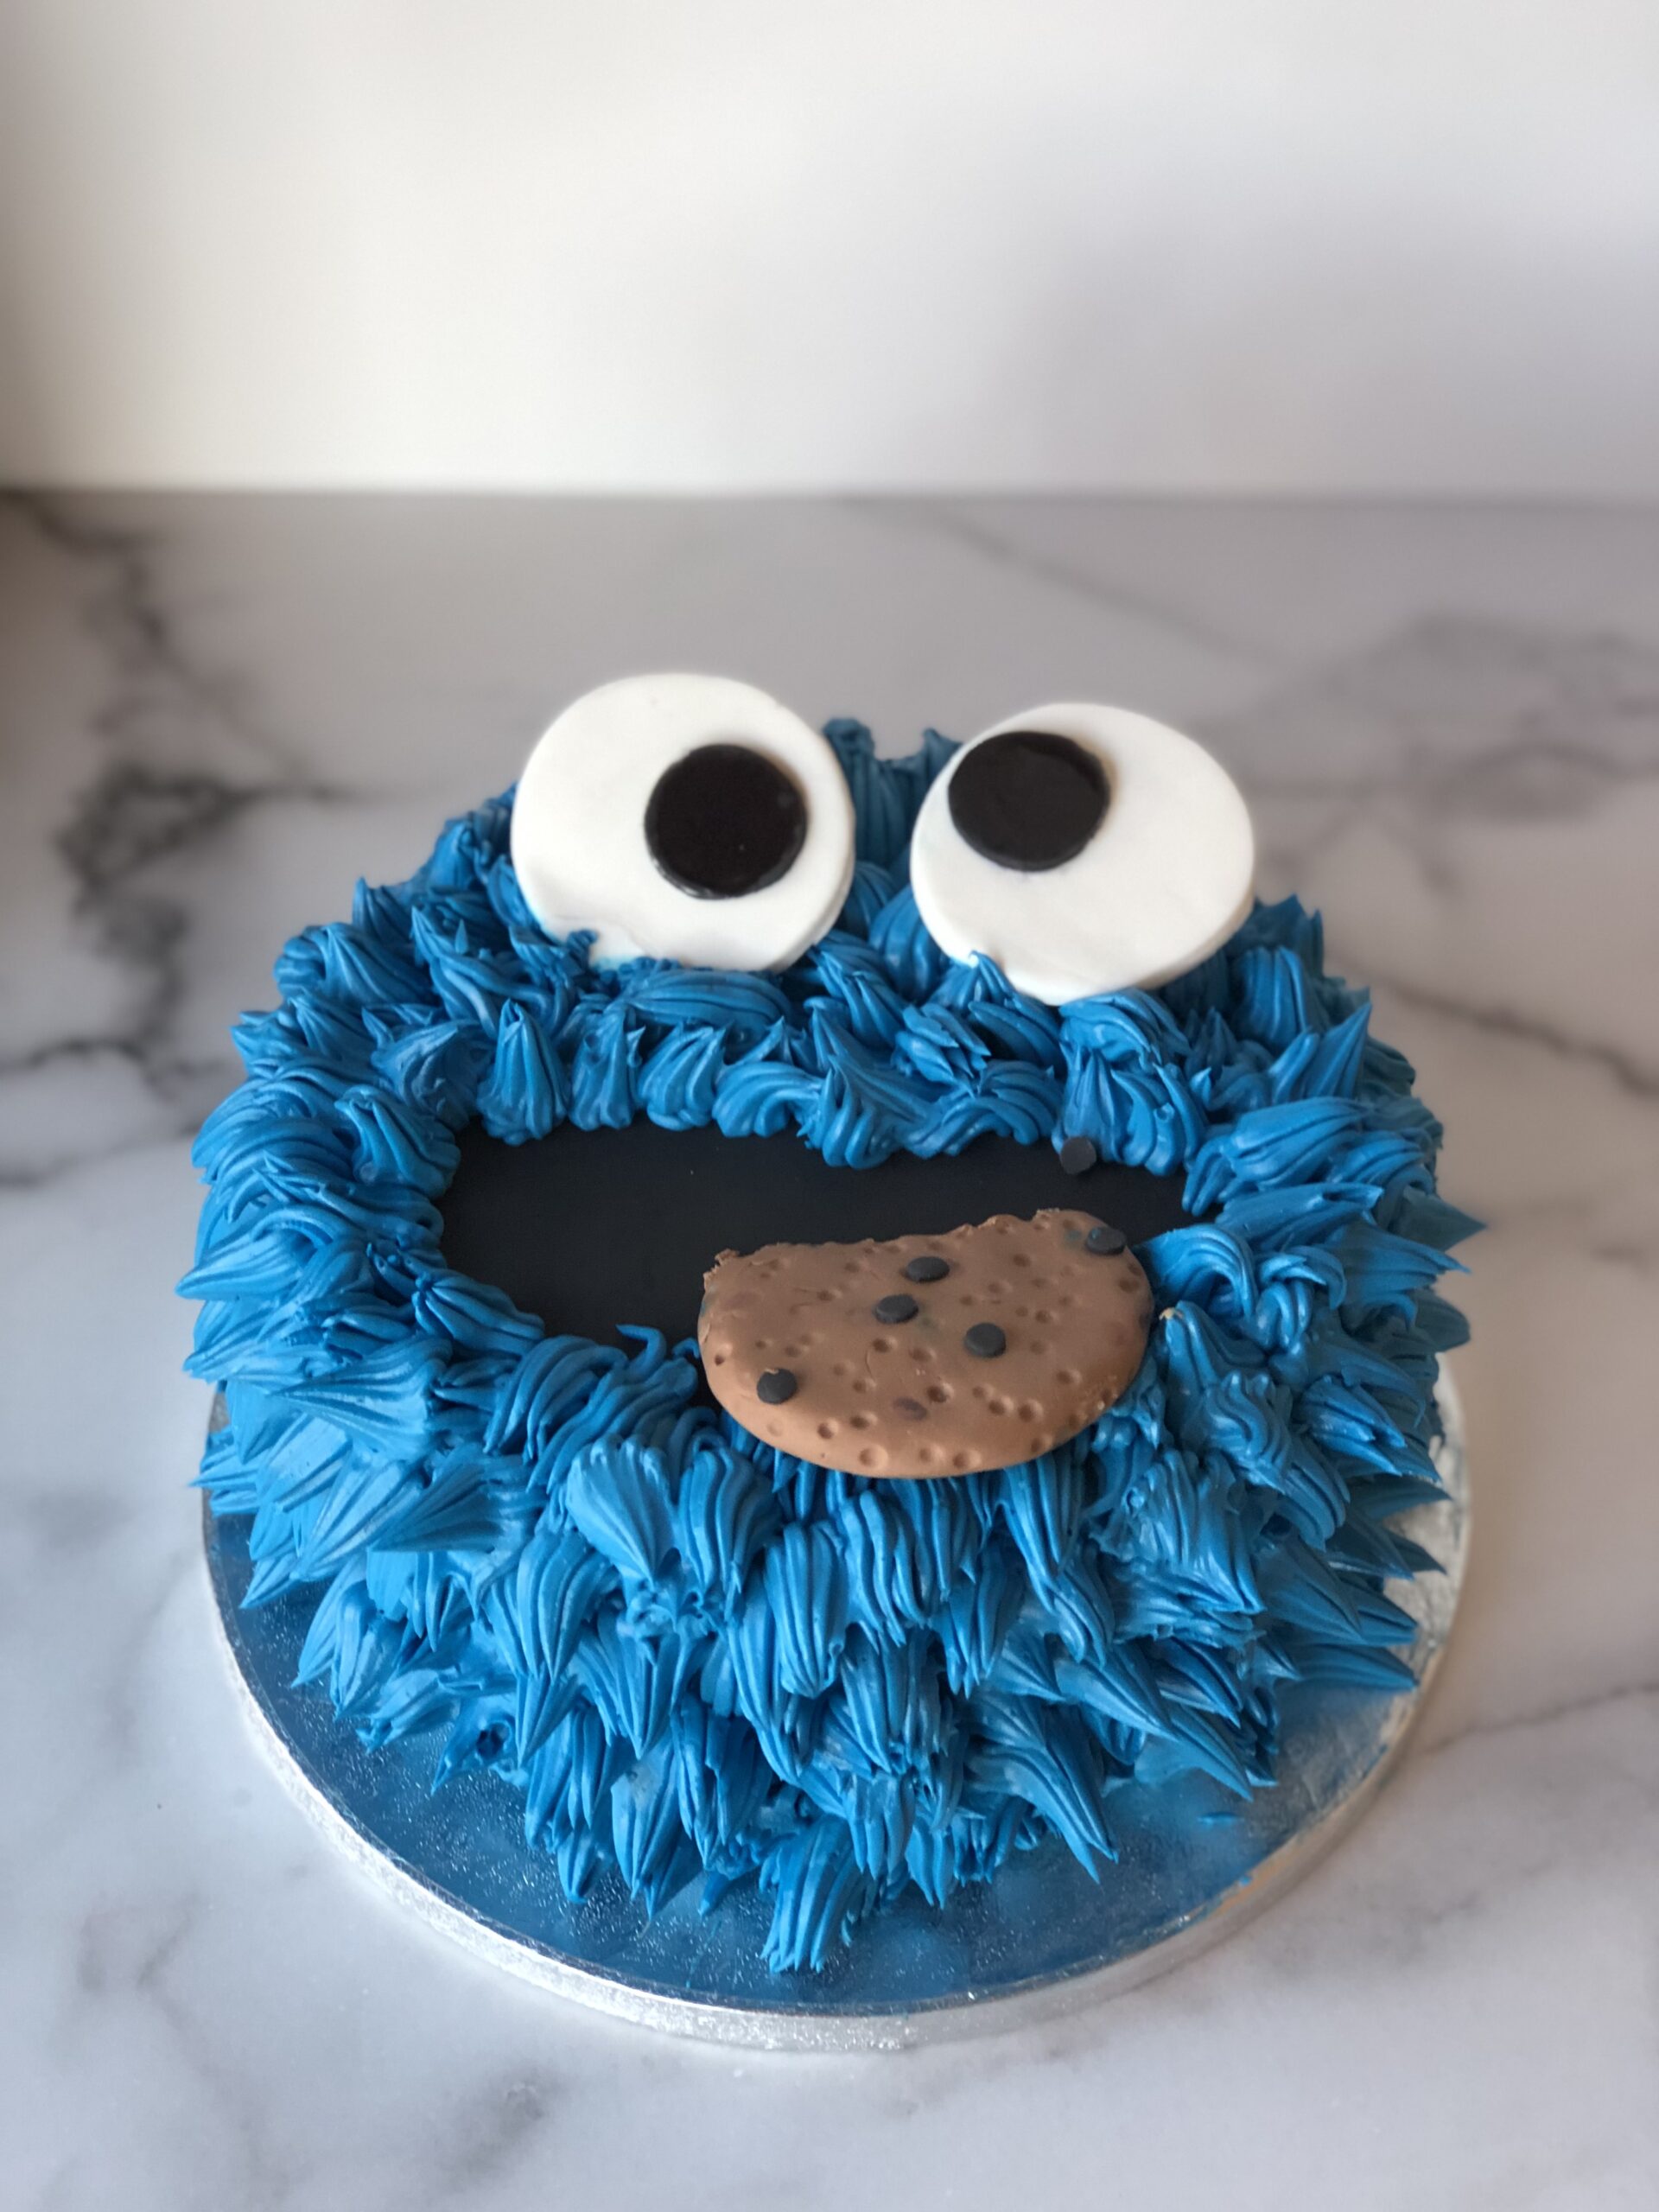 2,513 Monster Birthday Cake Images, Stock Photos & Vectors | Shutterstock